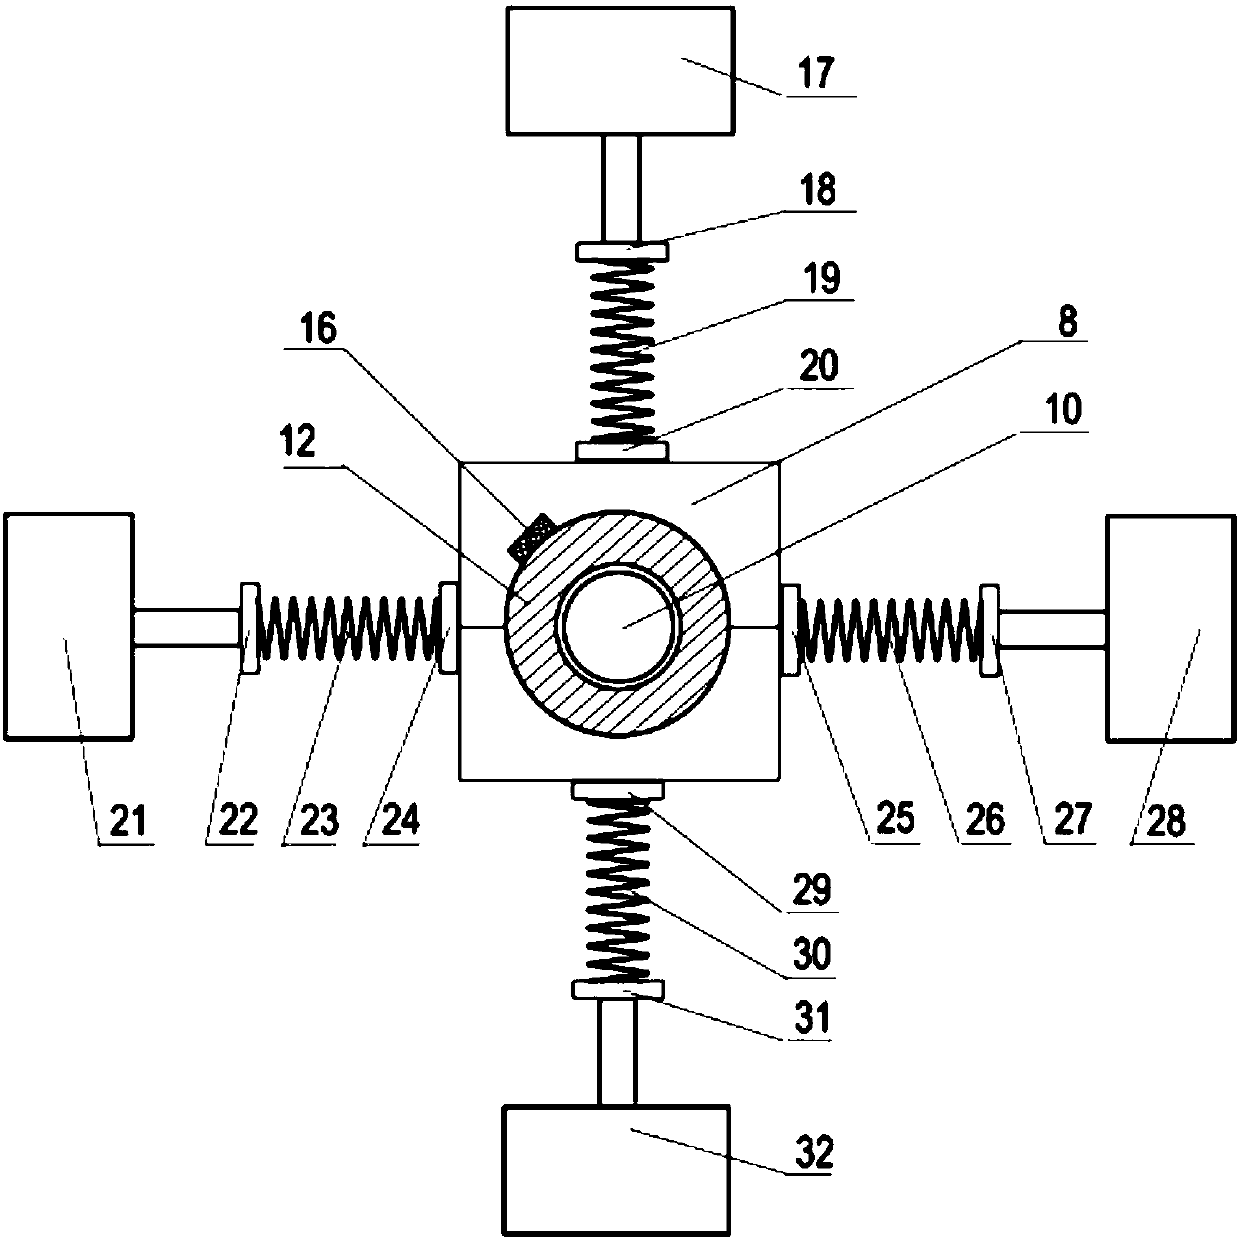 Bearing testing apparatus capable of applying radial alternating load